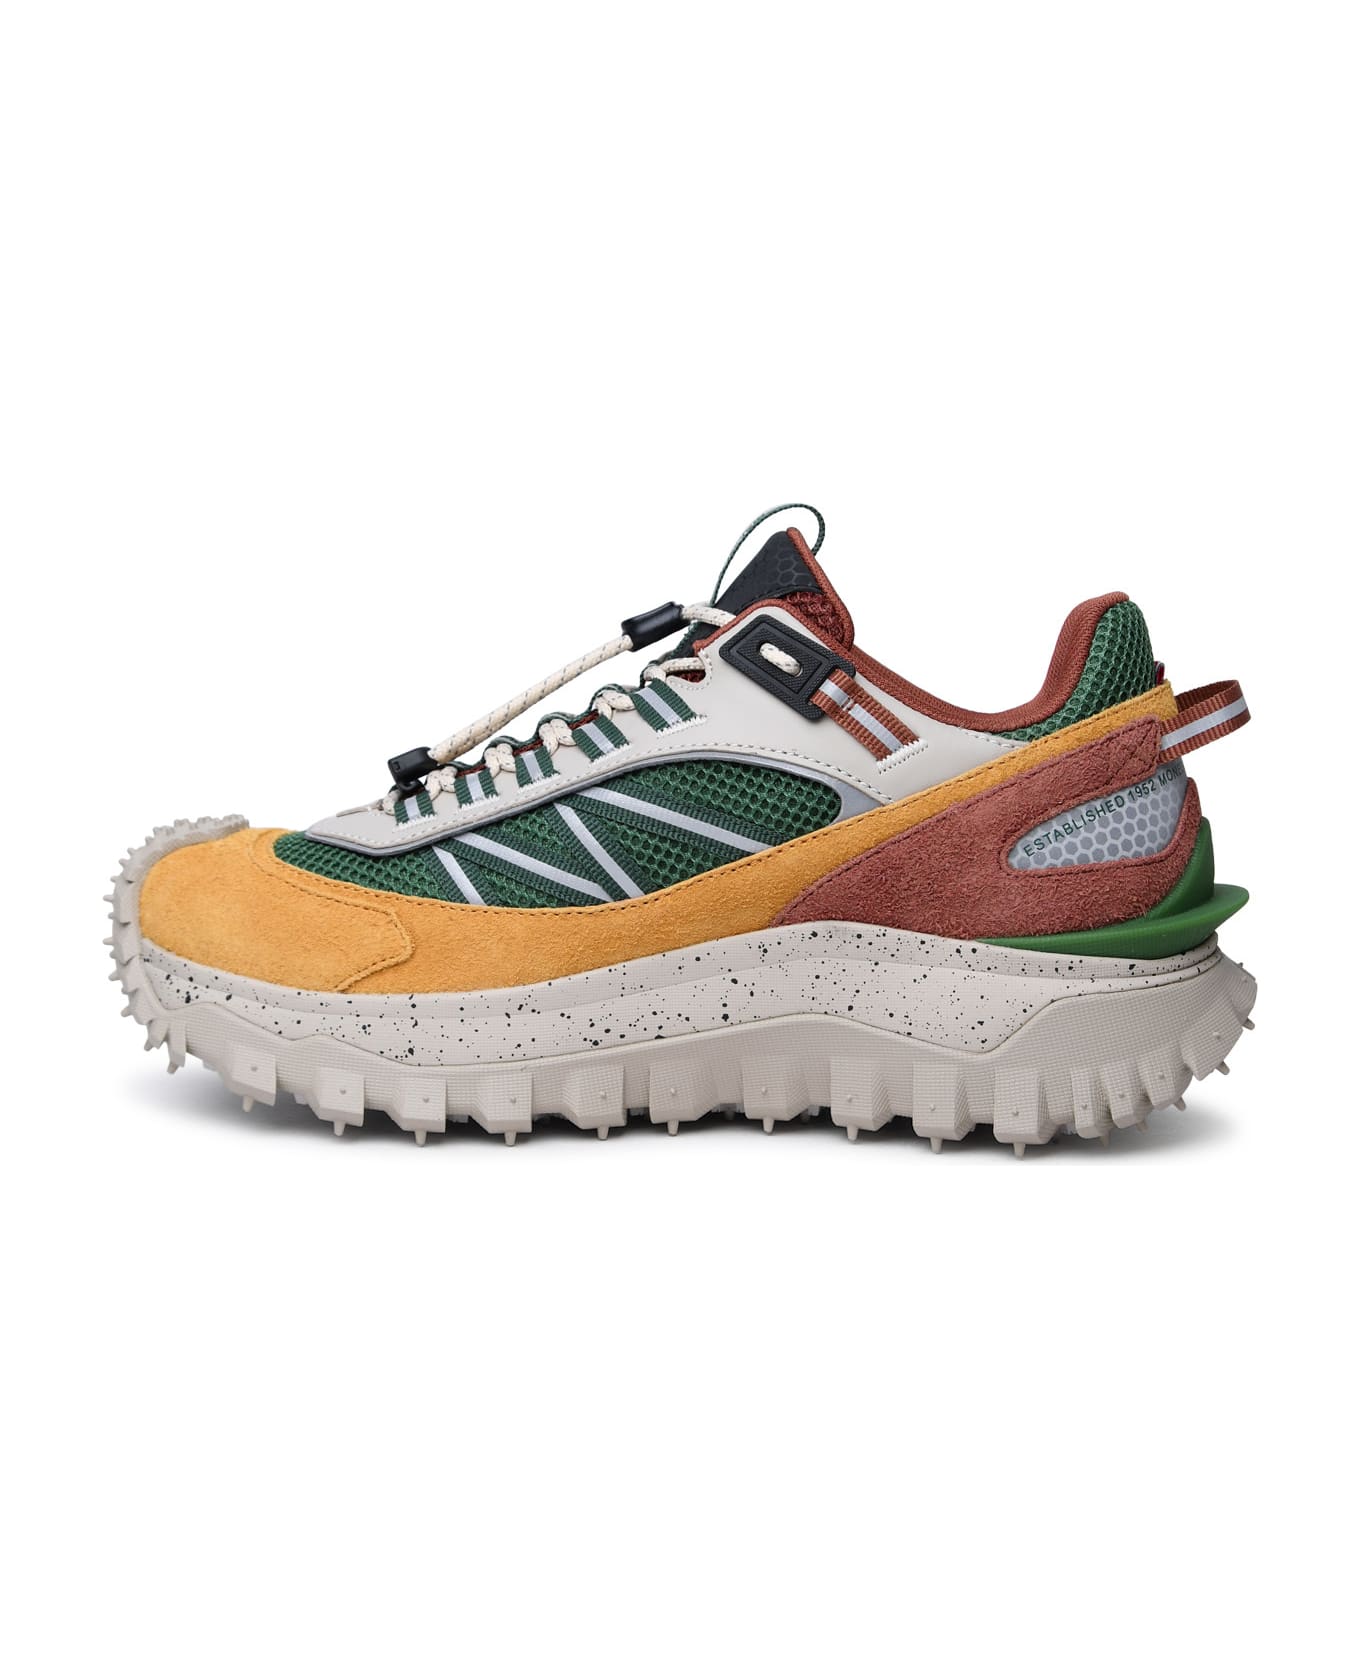 Moncler Multicolor Leather Blend Sneakers - Multicolor スニーカー